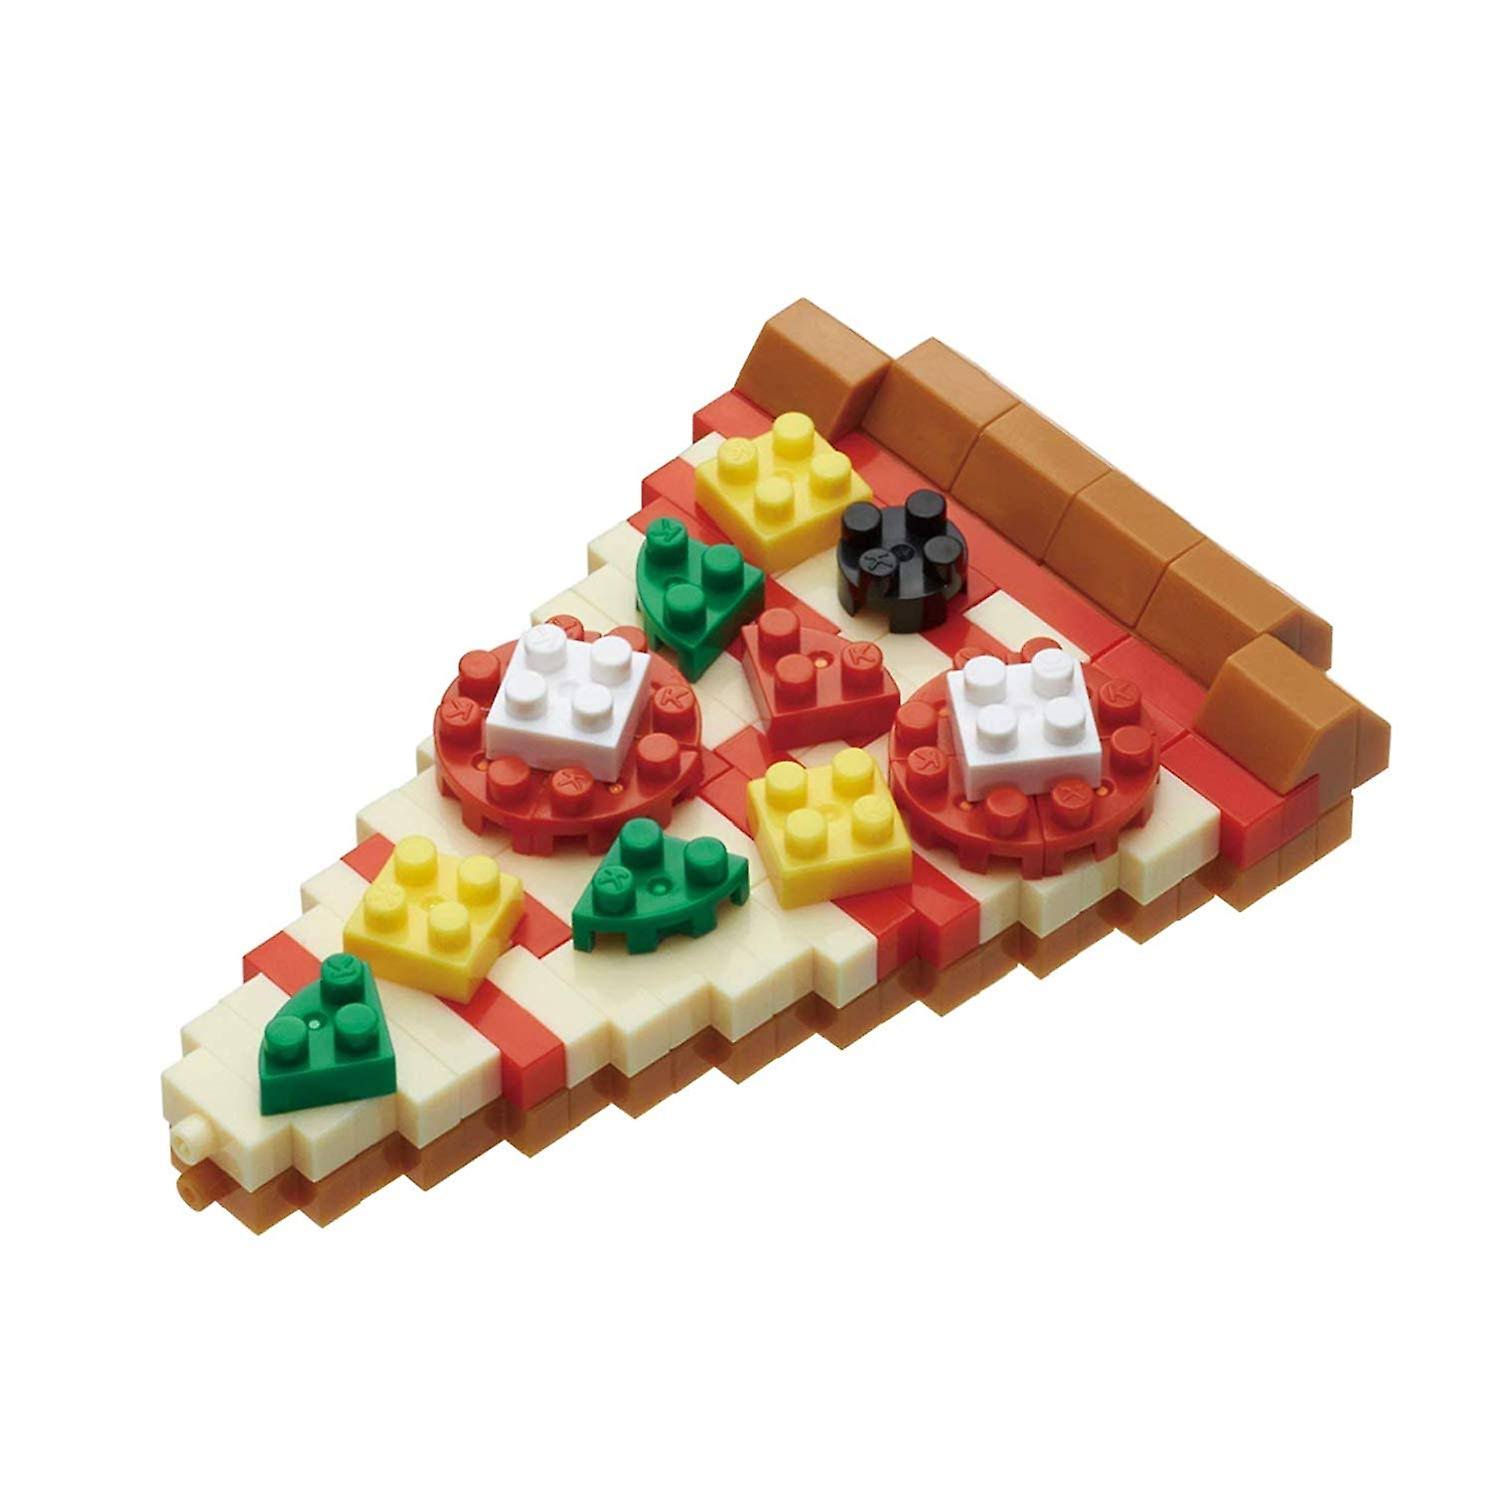 Nanoblock Micro Sized Building Block Construction Toy - Pizza